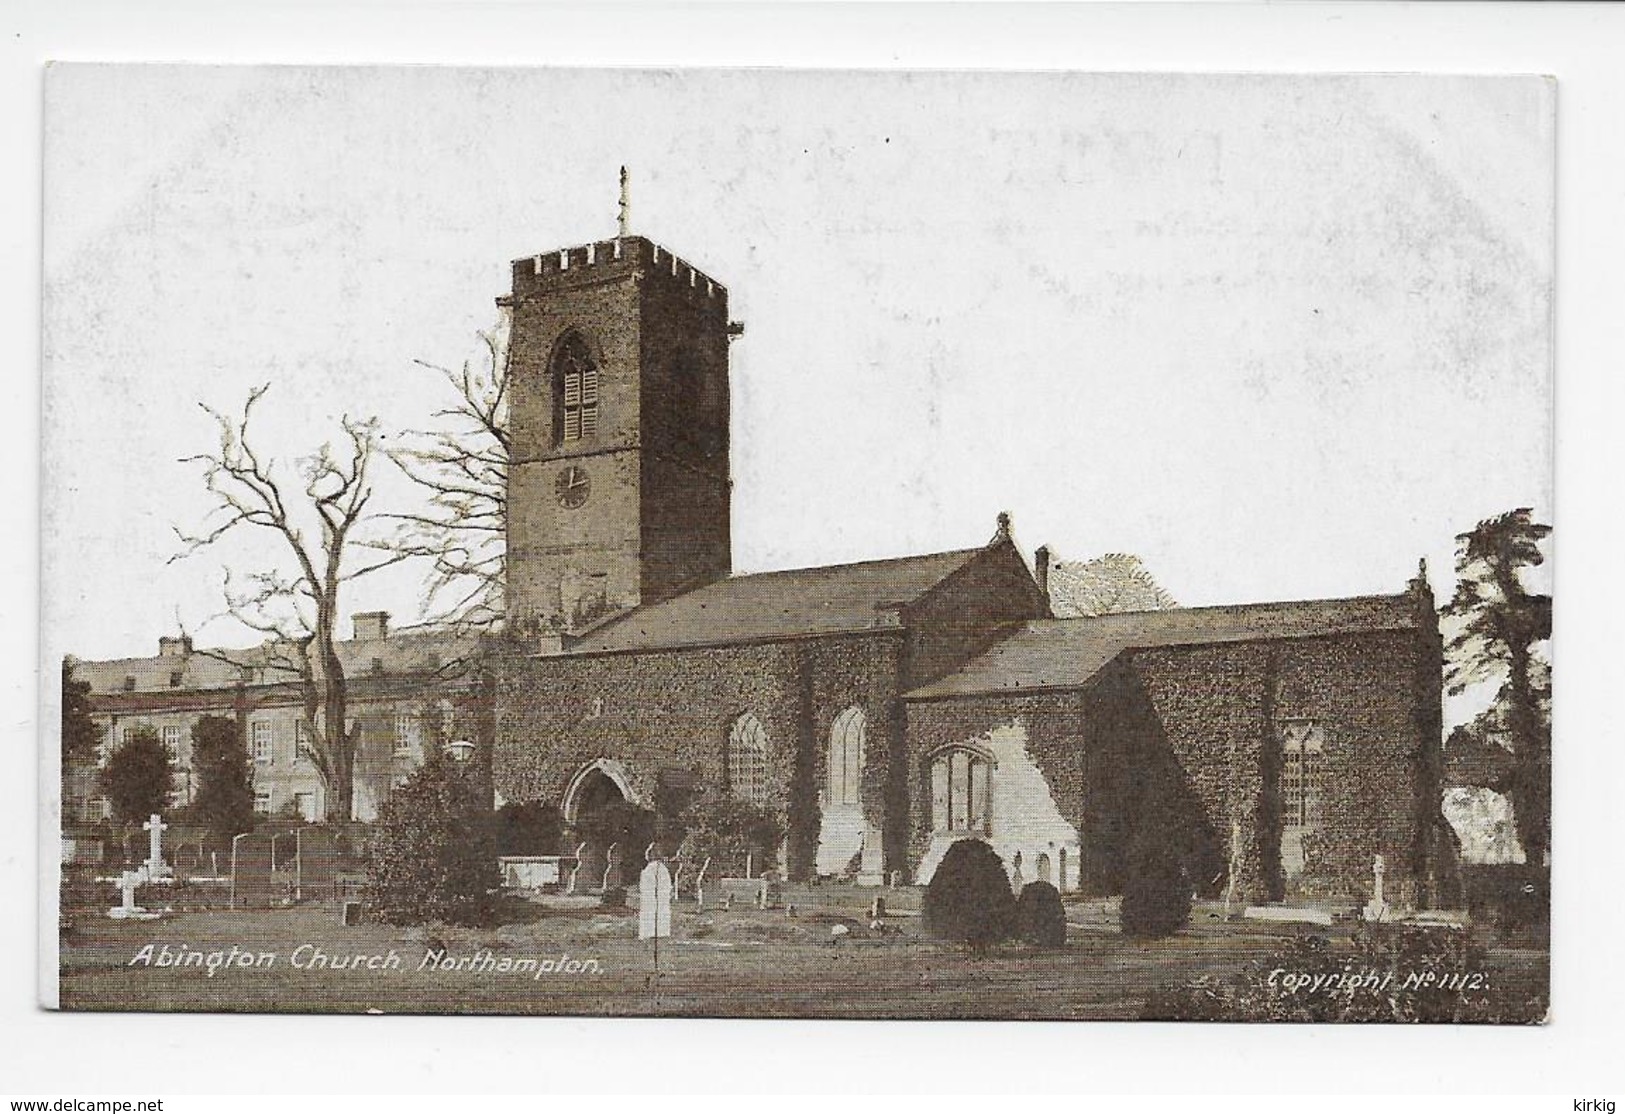 KI 785 - Abington Church - Northamptonshire